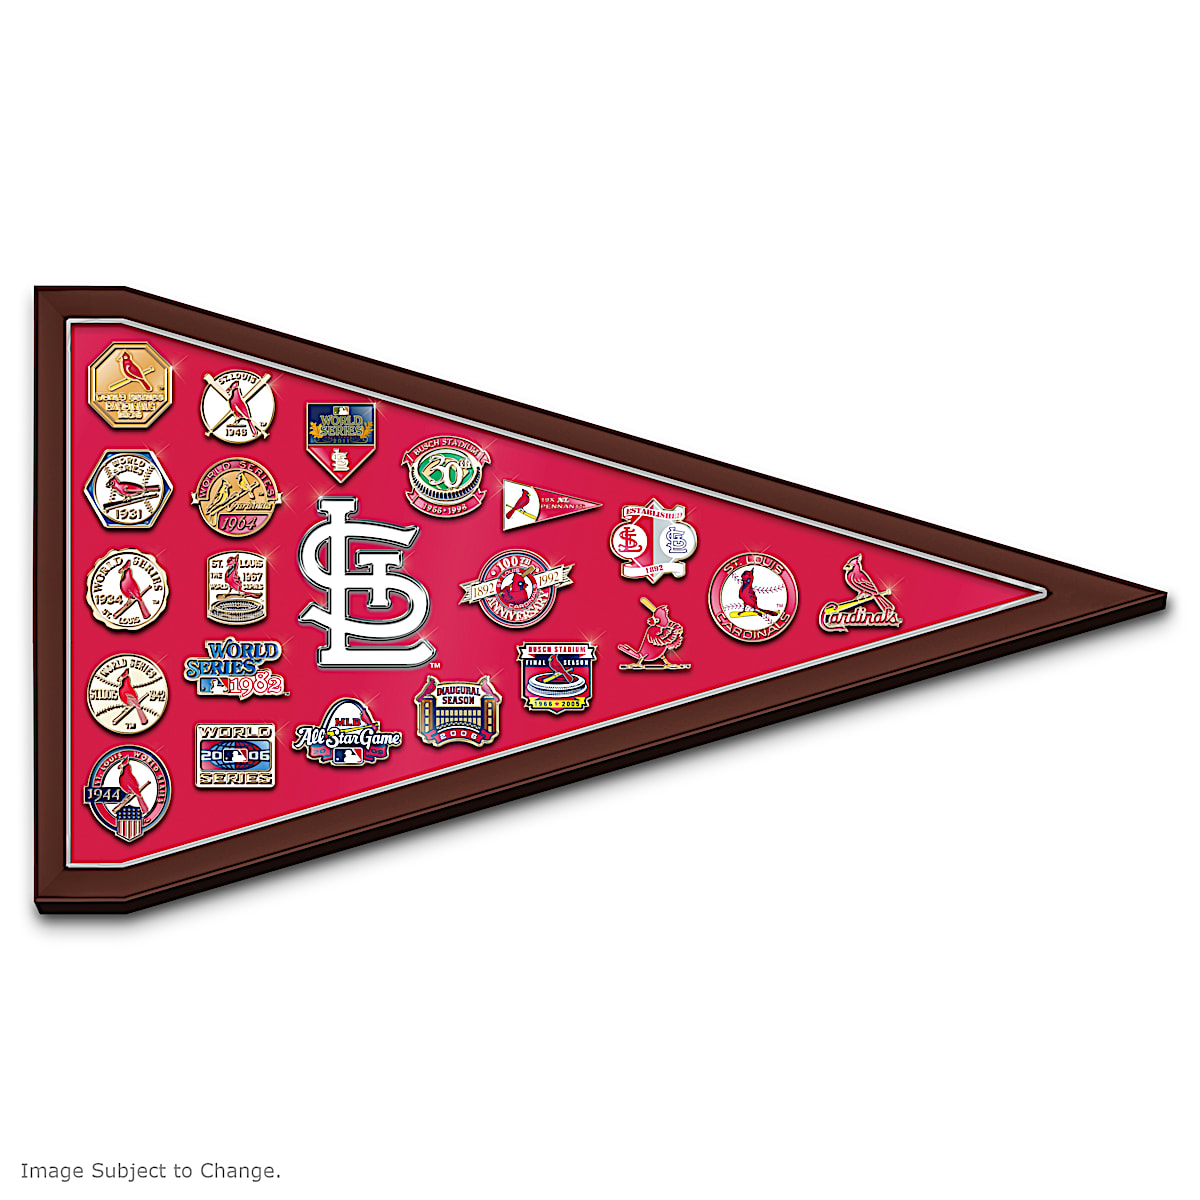 St. Louis Cardinals Memorabilia, St. Louis Cardinals Collectibles